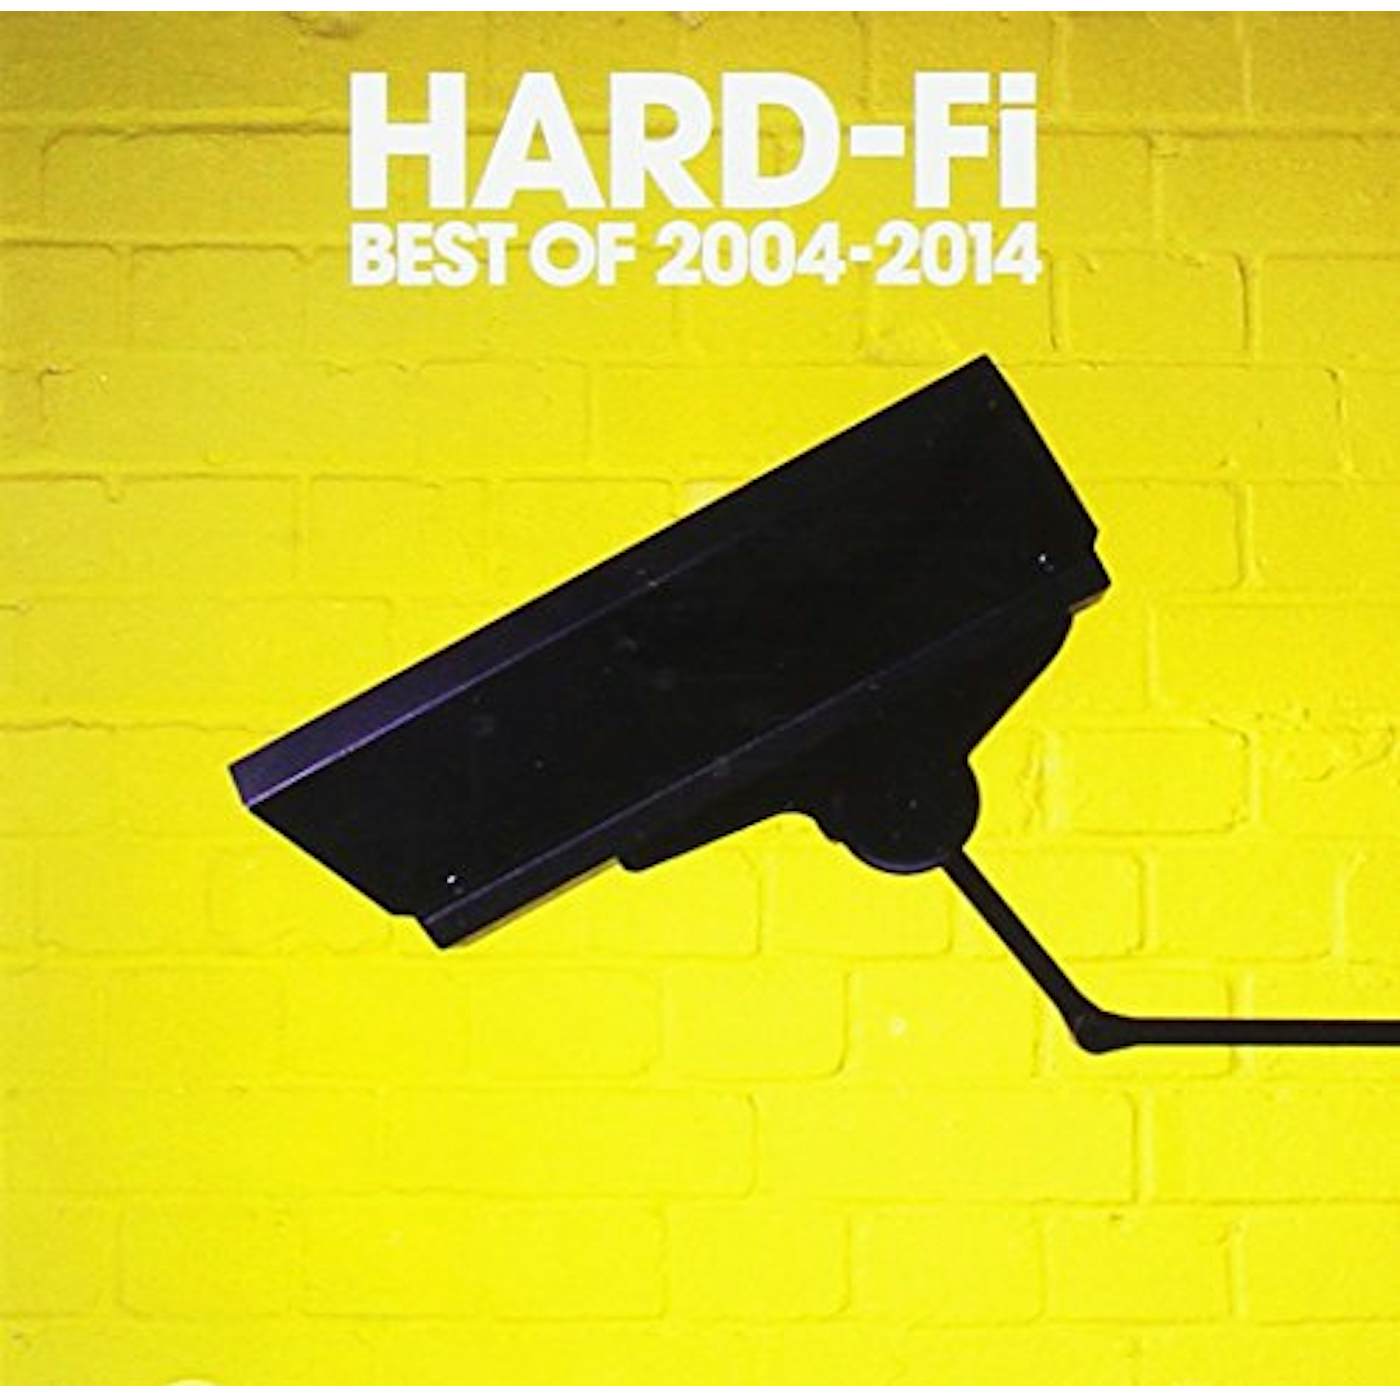 Hard-FI BEST OF 2004-2014 CD